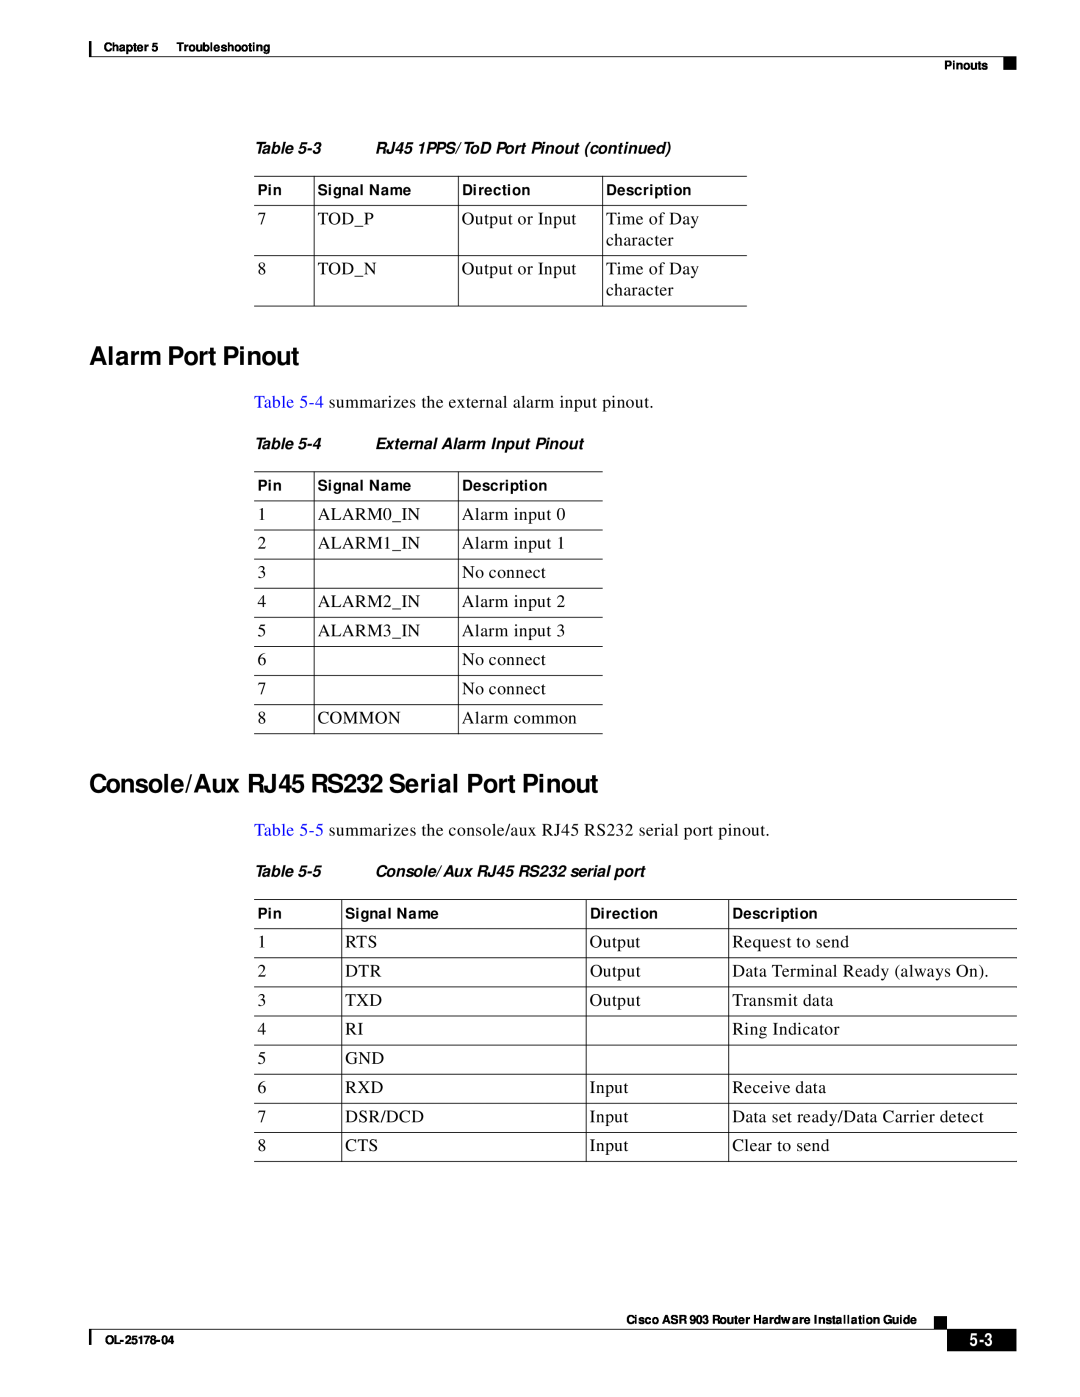 Cisco Systems 903 manual Alarm Port Pinout, Console/Aux RJ45 RS232 Serial Port Pinout, RJ45 1PPS/ToD Port Pinout continued 